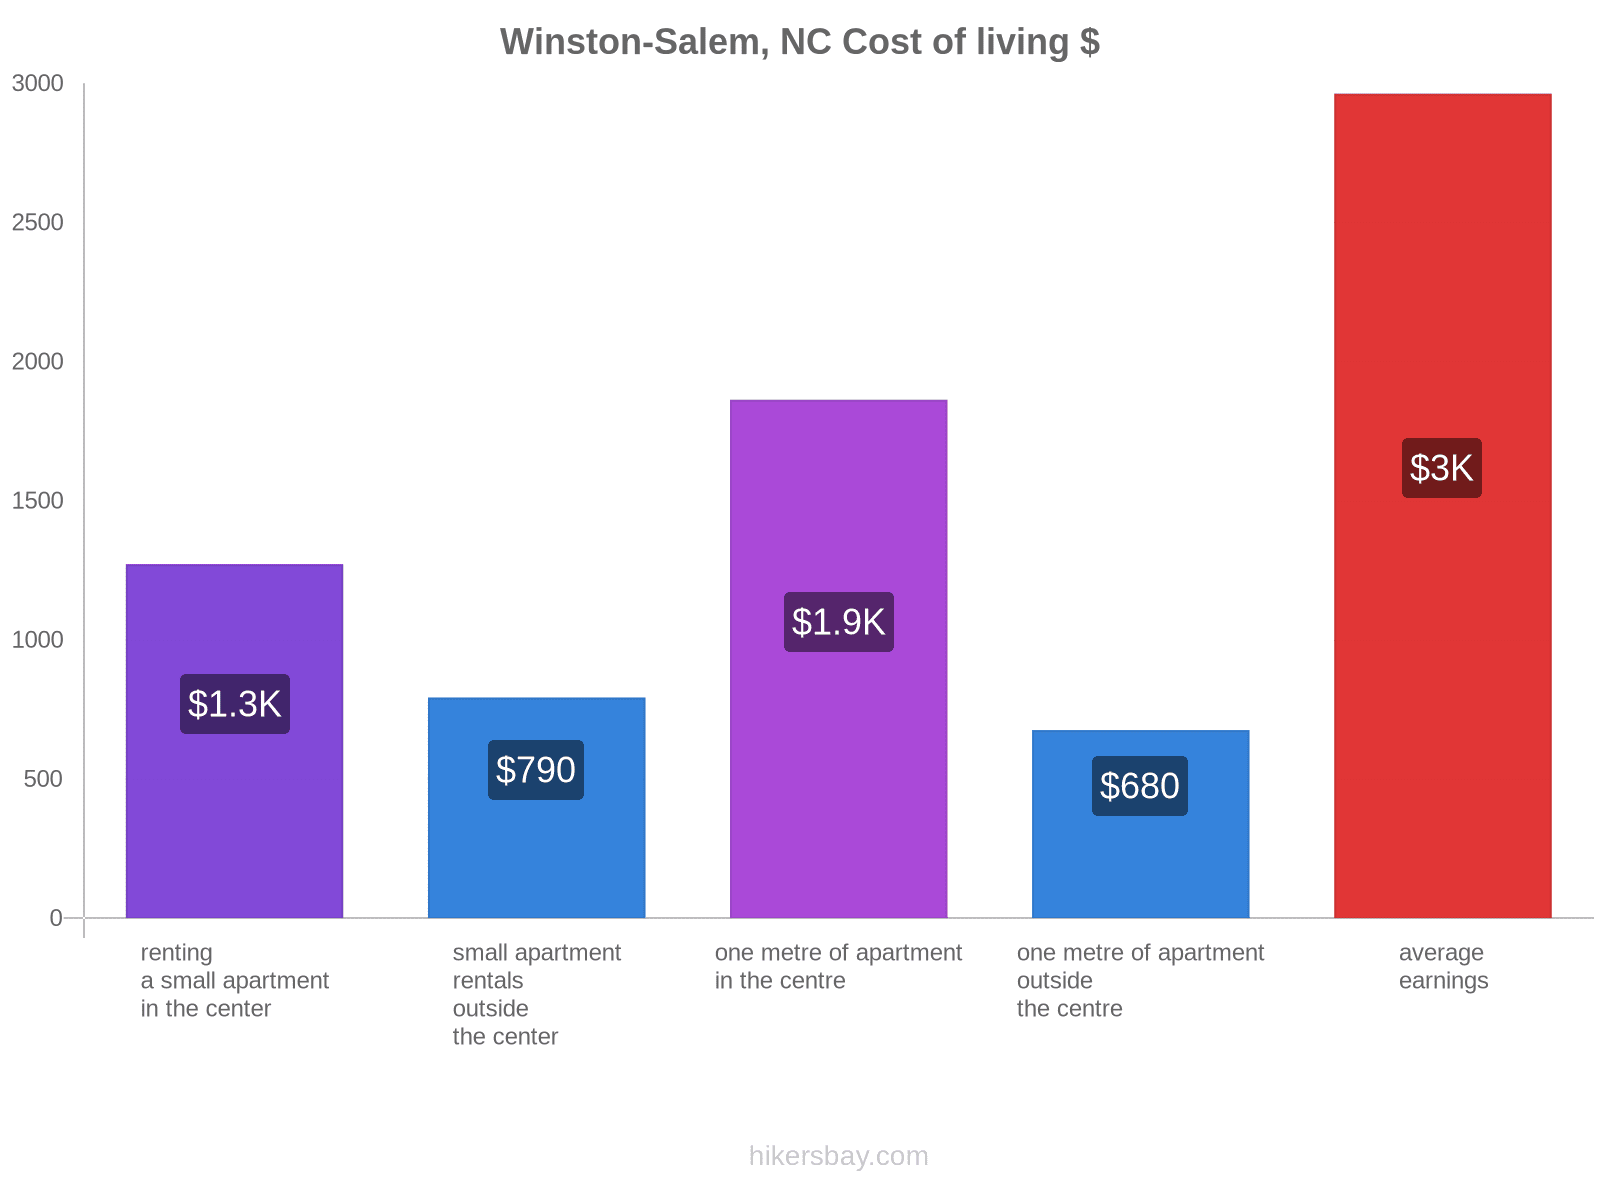 Winston-Salem, NC cost of living hikersbay.com